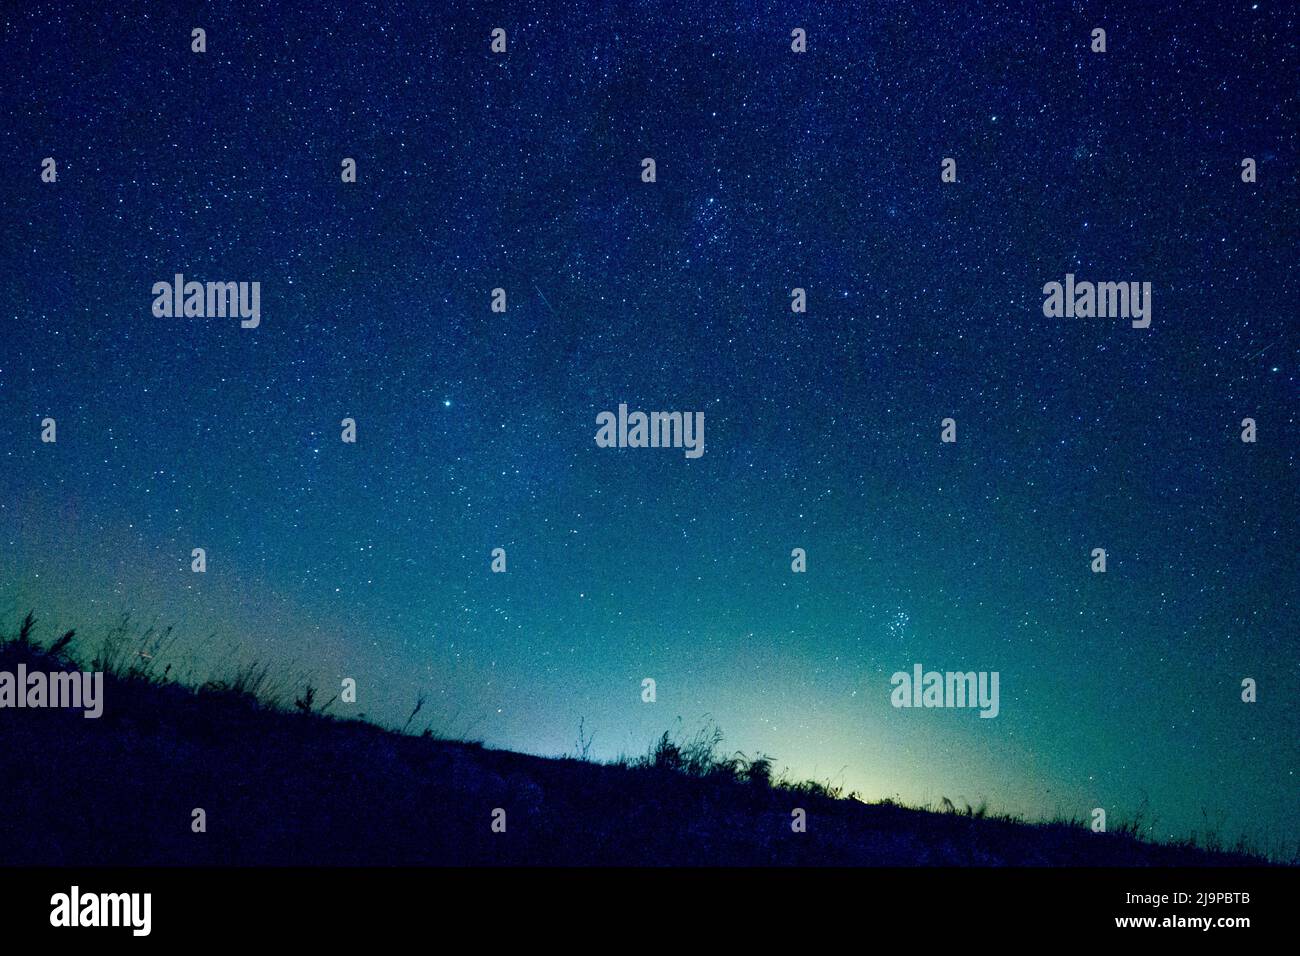 Blue dark night sky with many stars Milkyway cosmos background Stock Photo